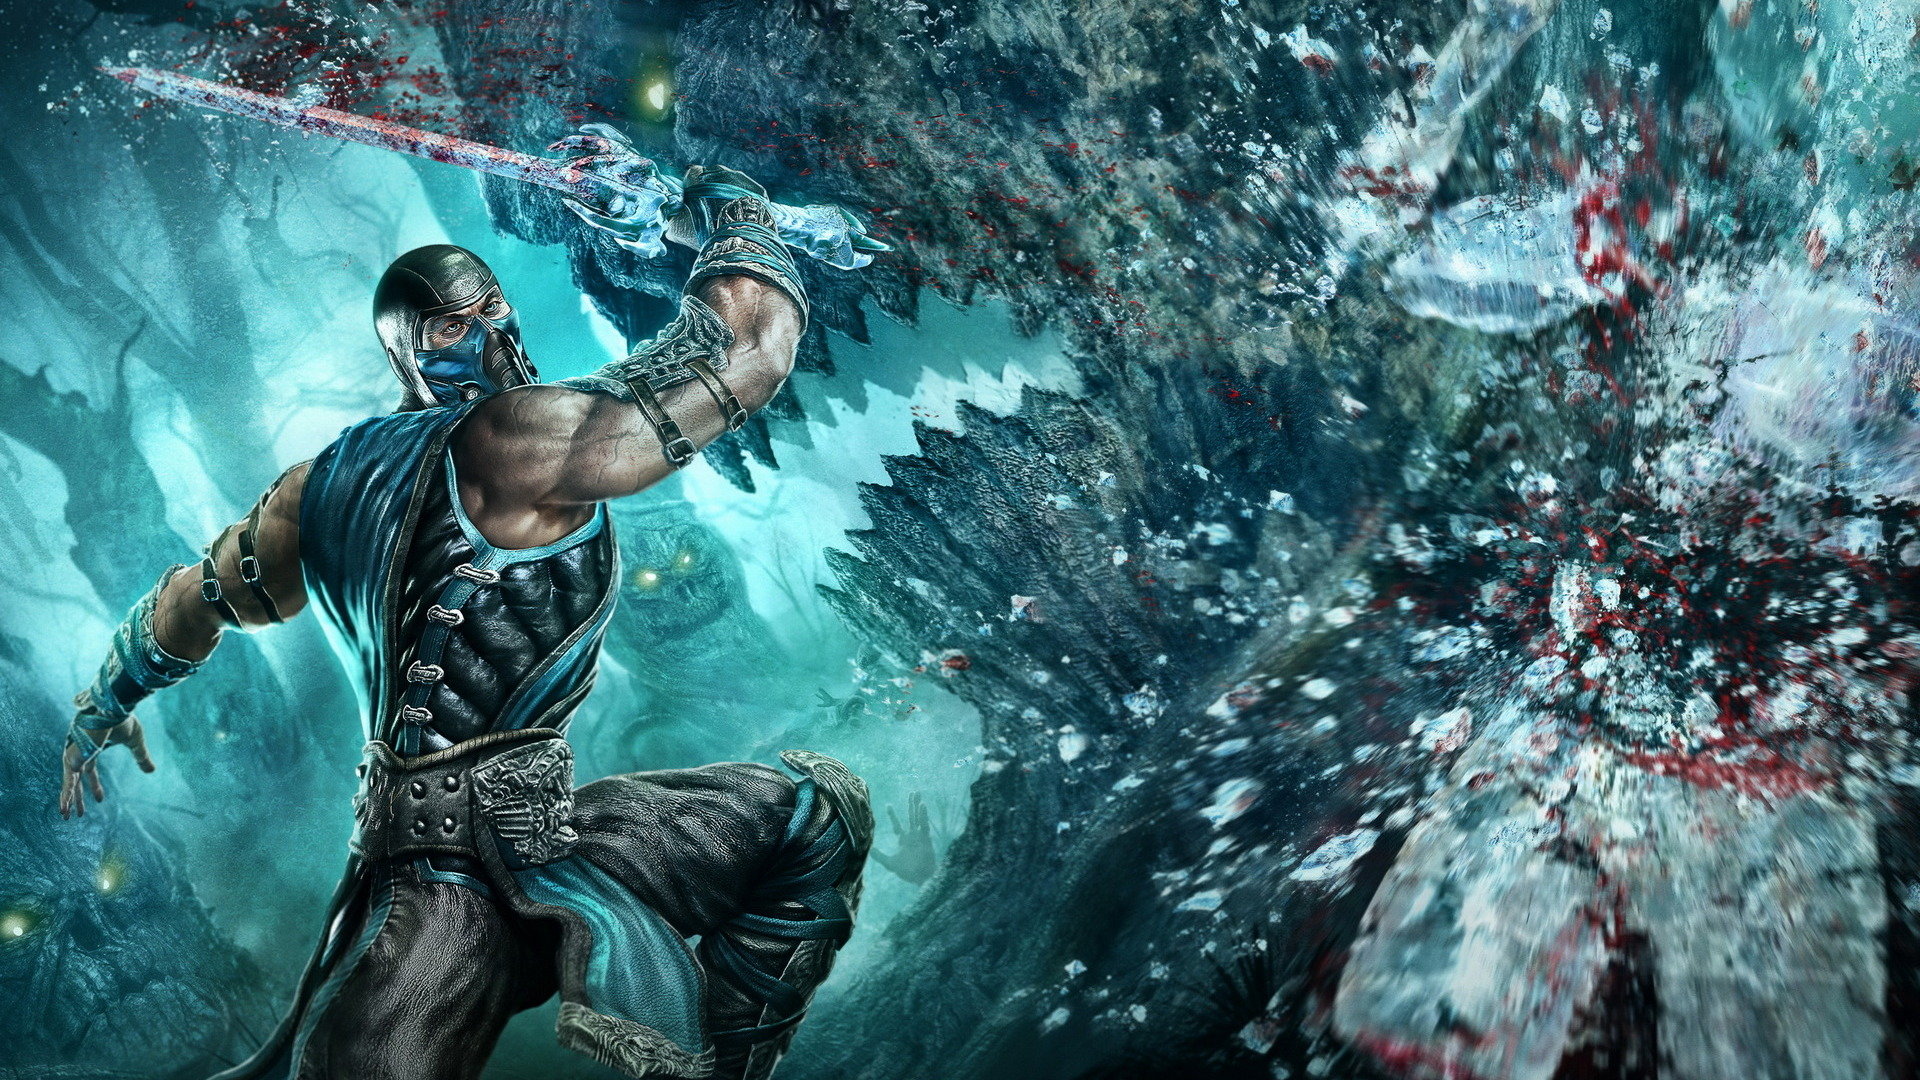 Free download Mortal Kombat wallpaper ID:183100 1080p for desktop